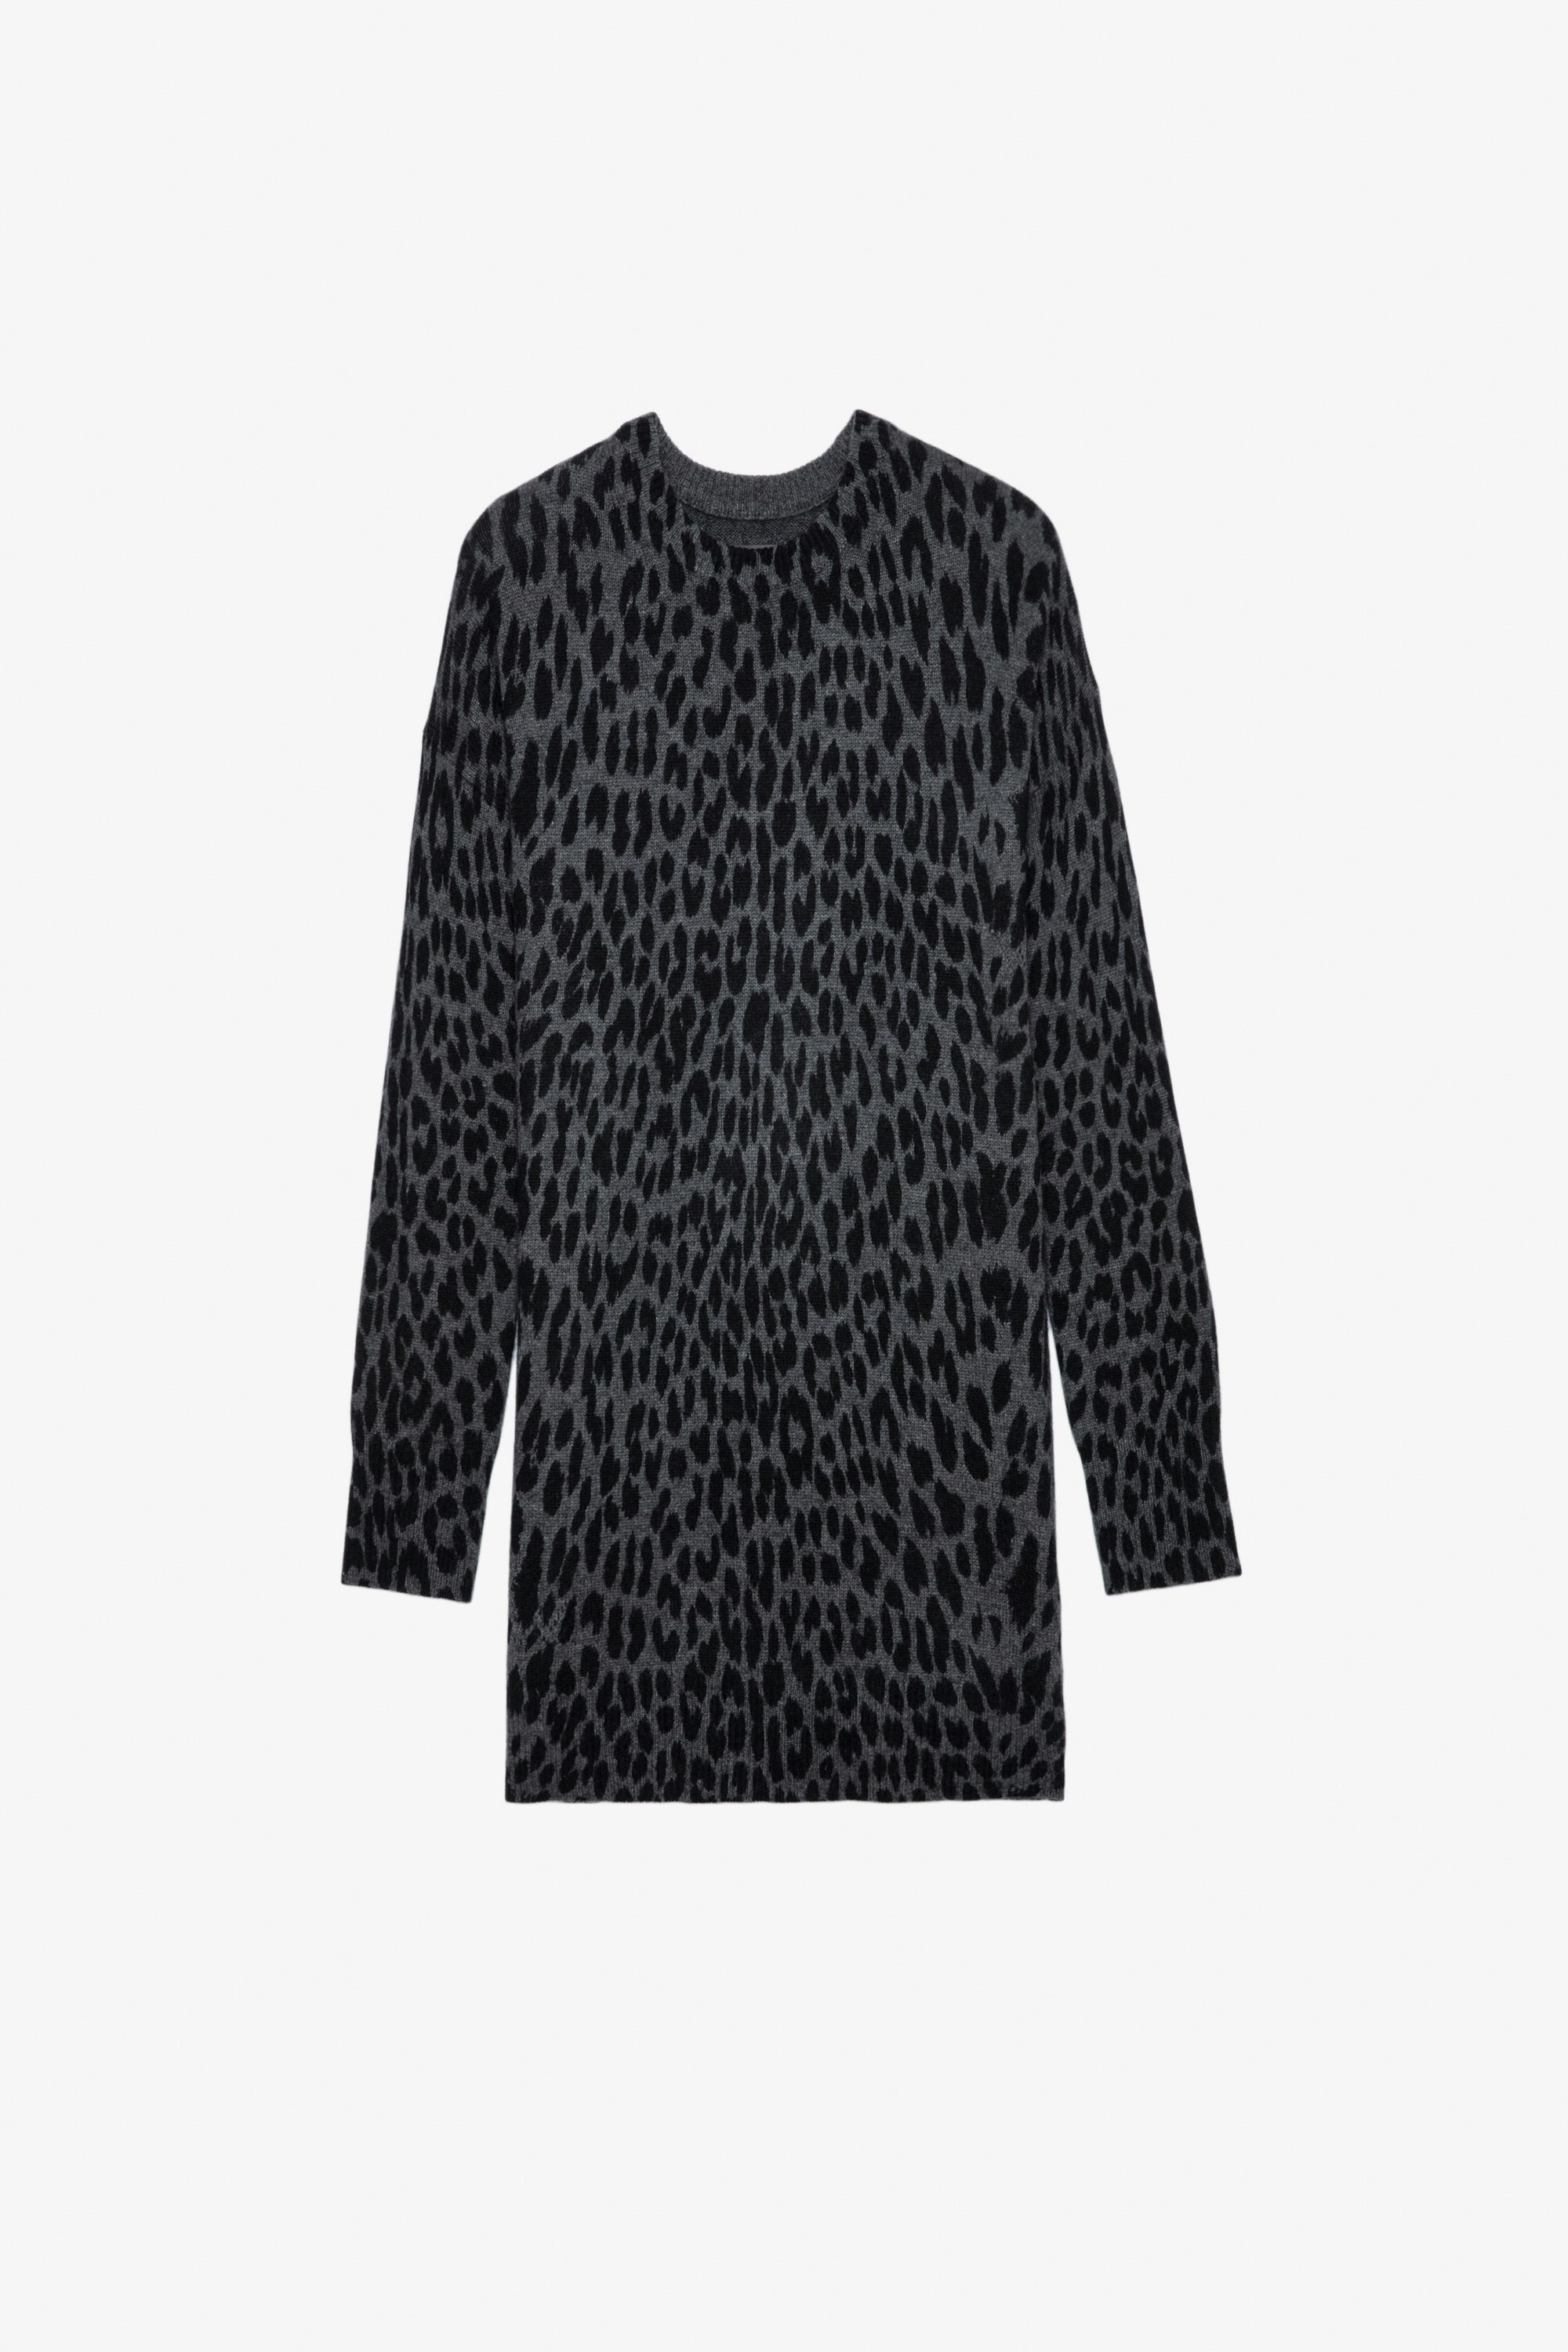 Malia Leopard Cashmere Dress Women’s short grey leopard-print cashmere dress.